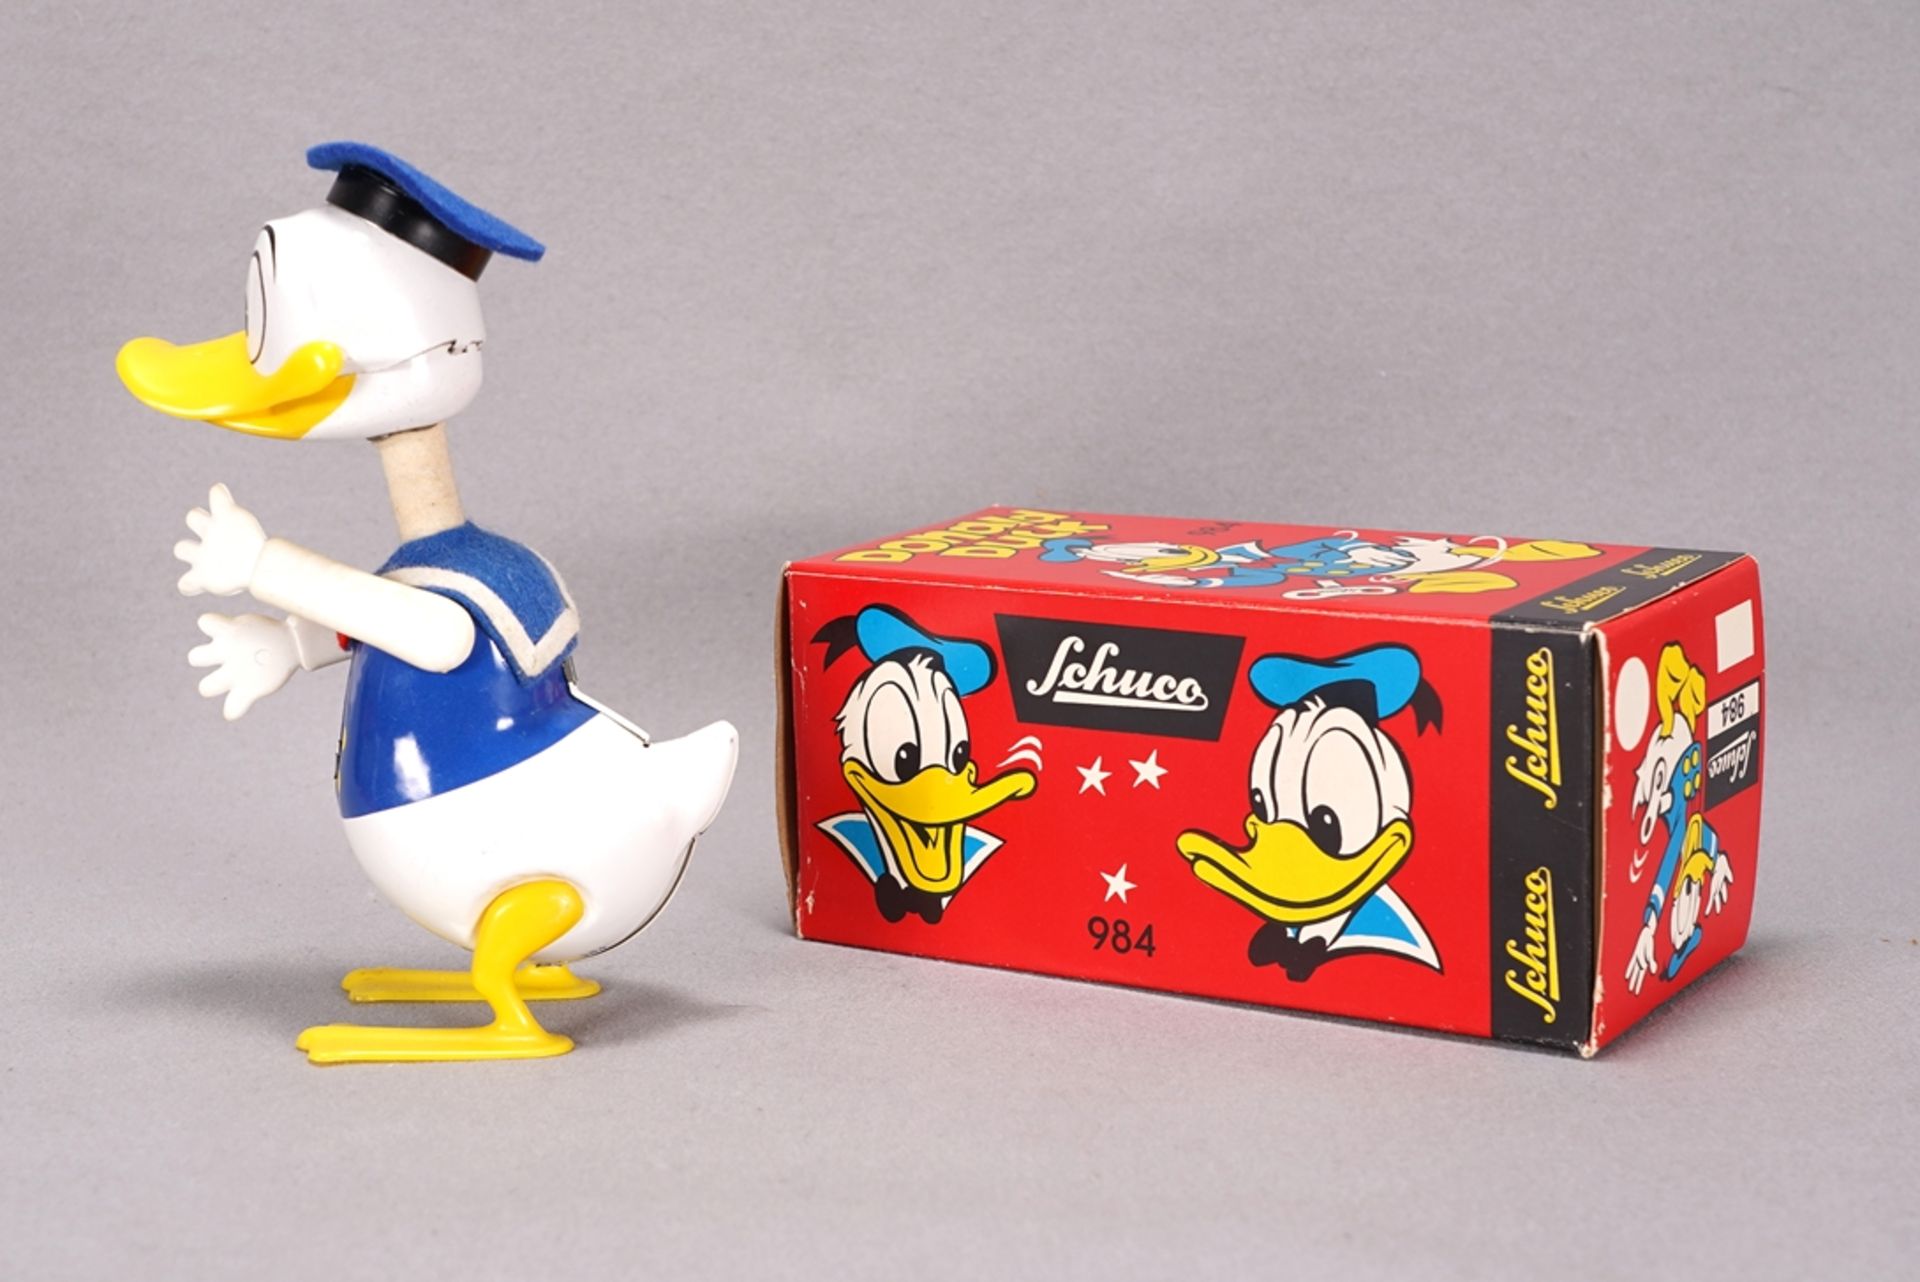 Schuco Donald Duck - Image 2 of 4